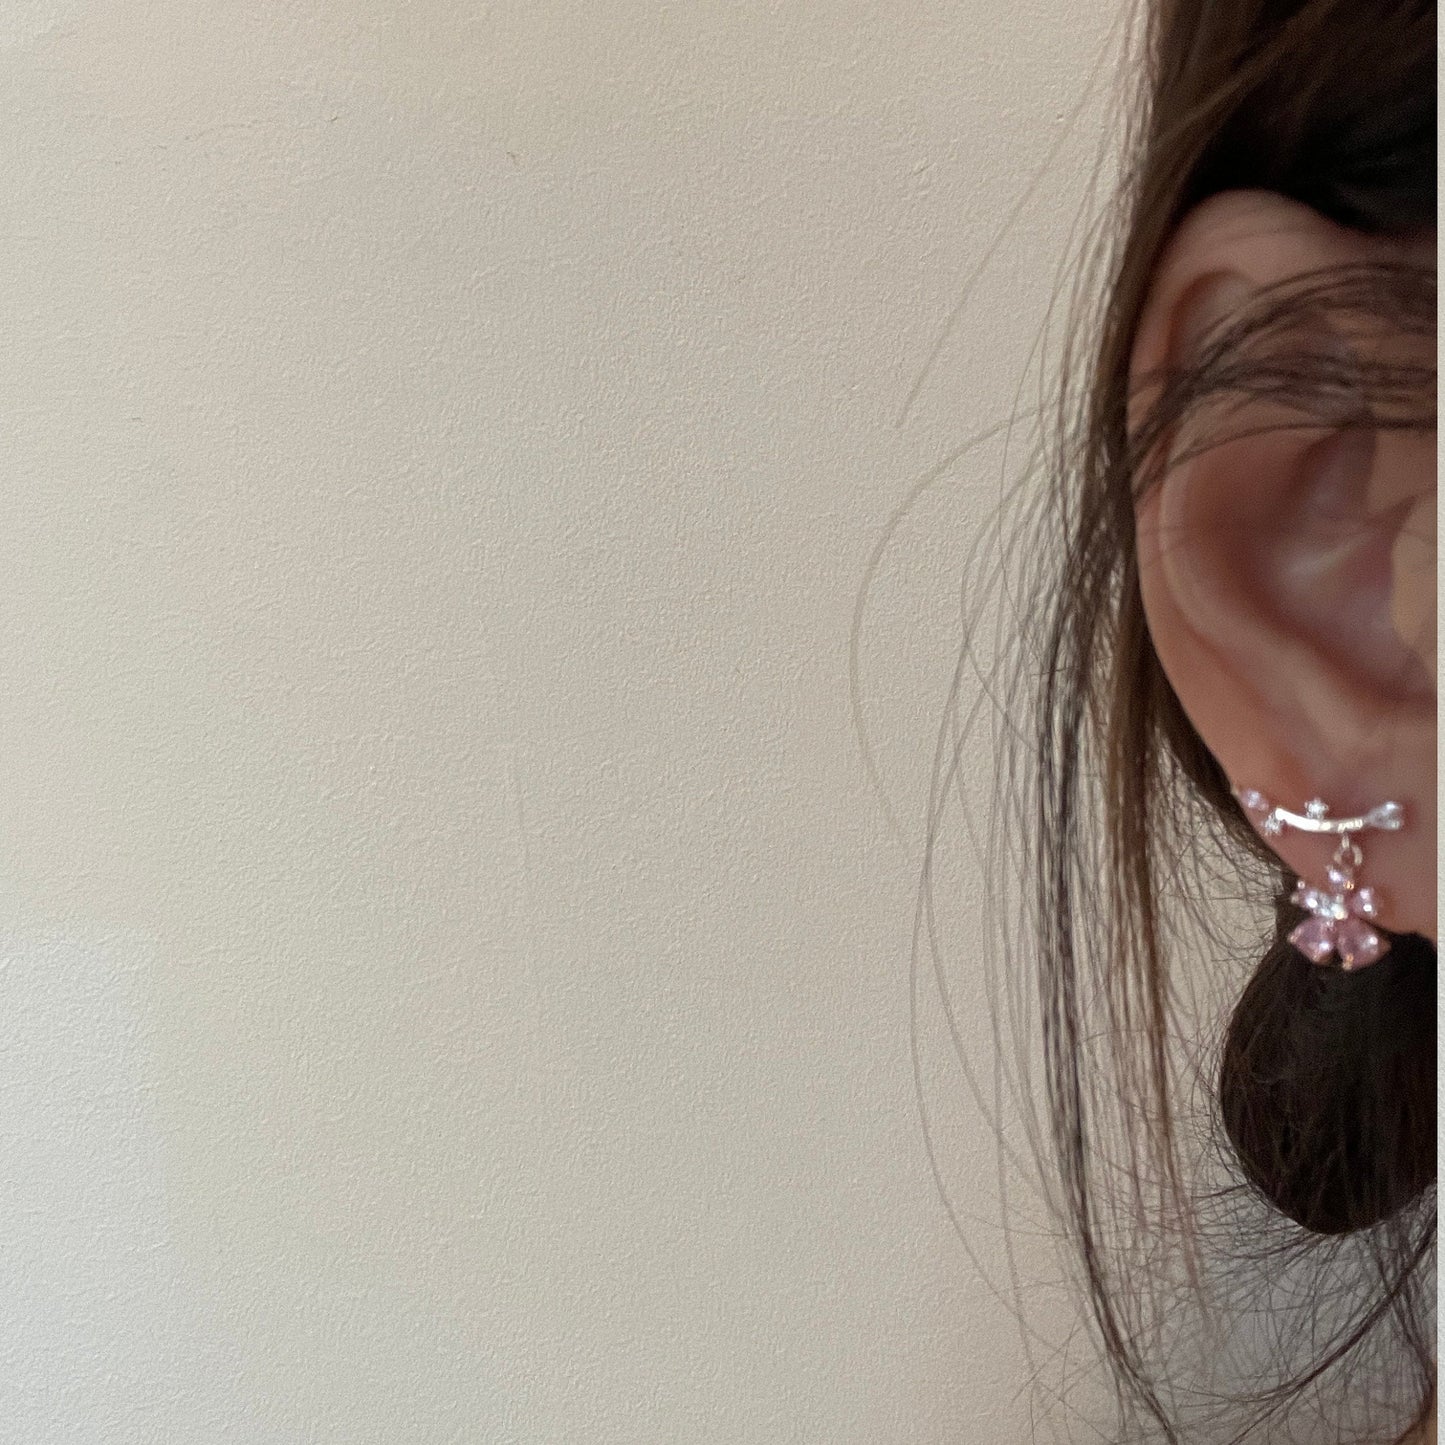 Pink flower earrings, Cherry blossom earrings, Japanese sakura earrings, Dainty ear climber, Star celestial ear jacket, Pastel pink earrings